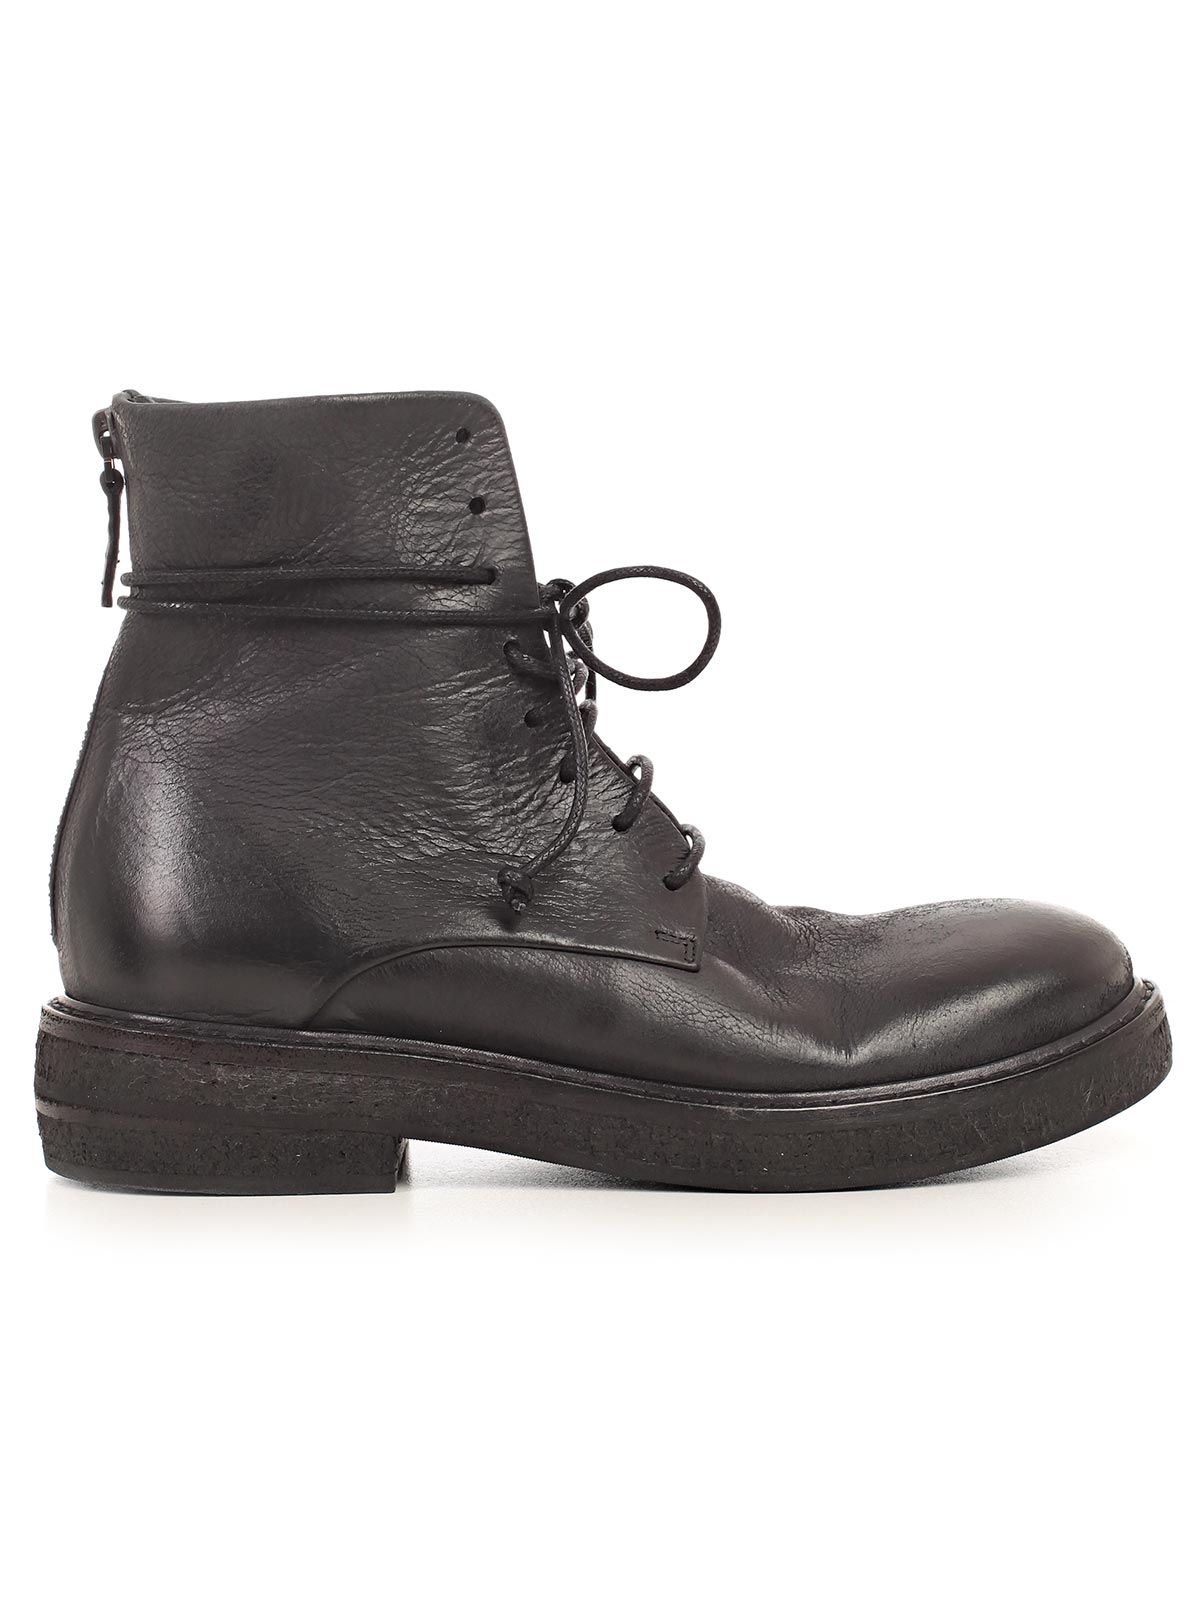 Marsell Shoes MW2952.5066 - NERO BLACK 